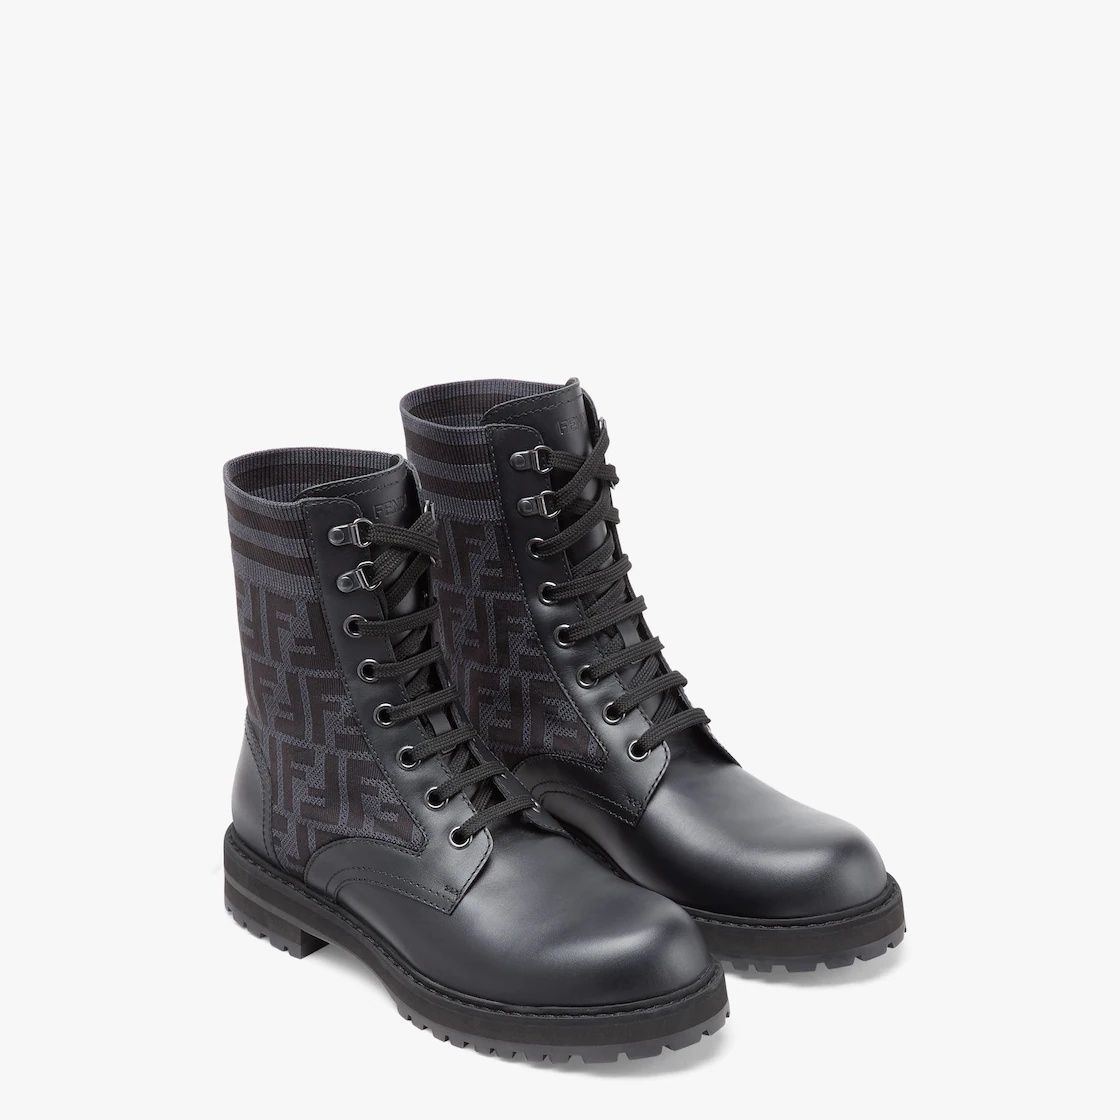 Black leather biker boots - 4